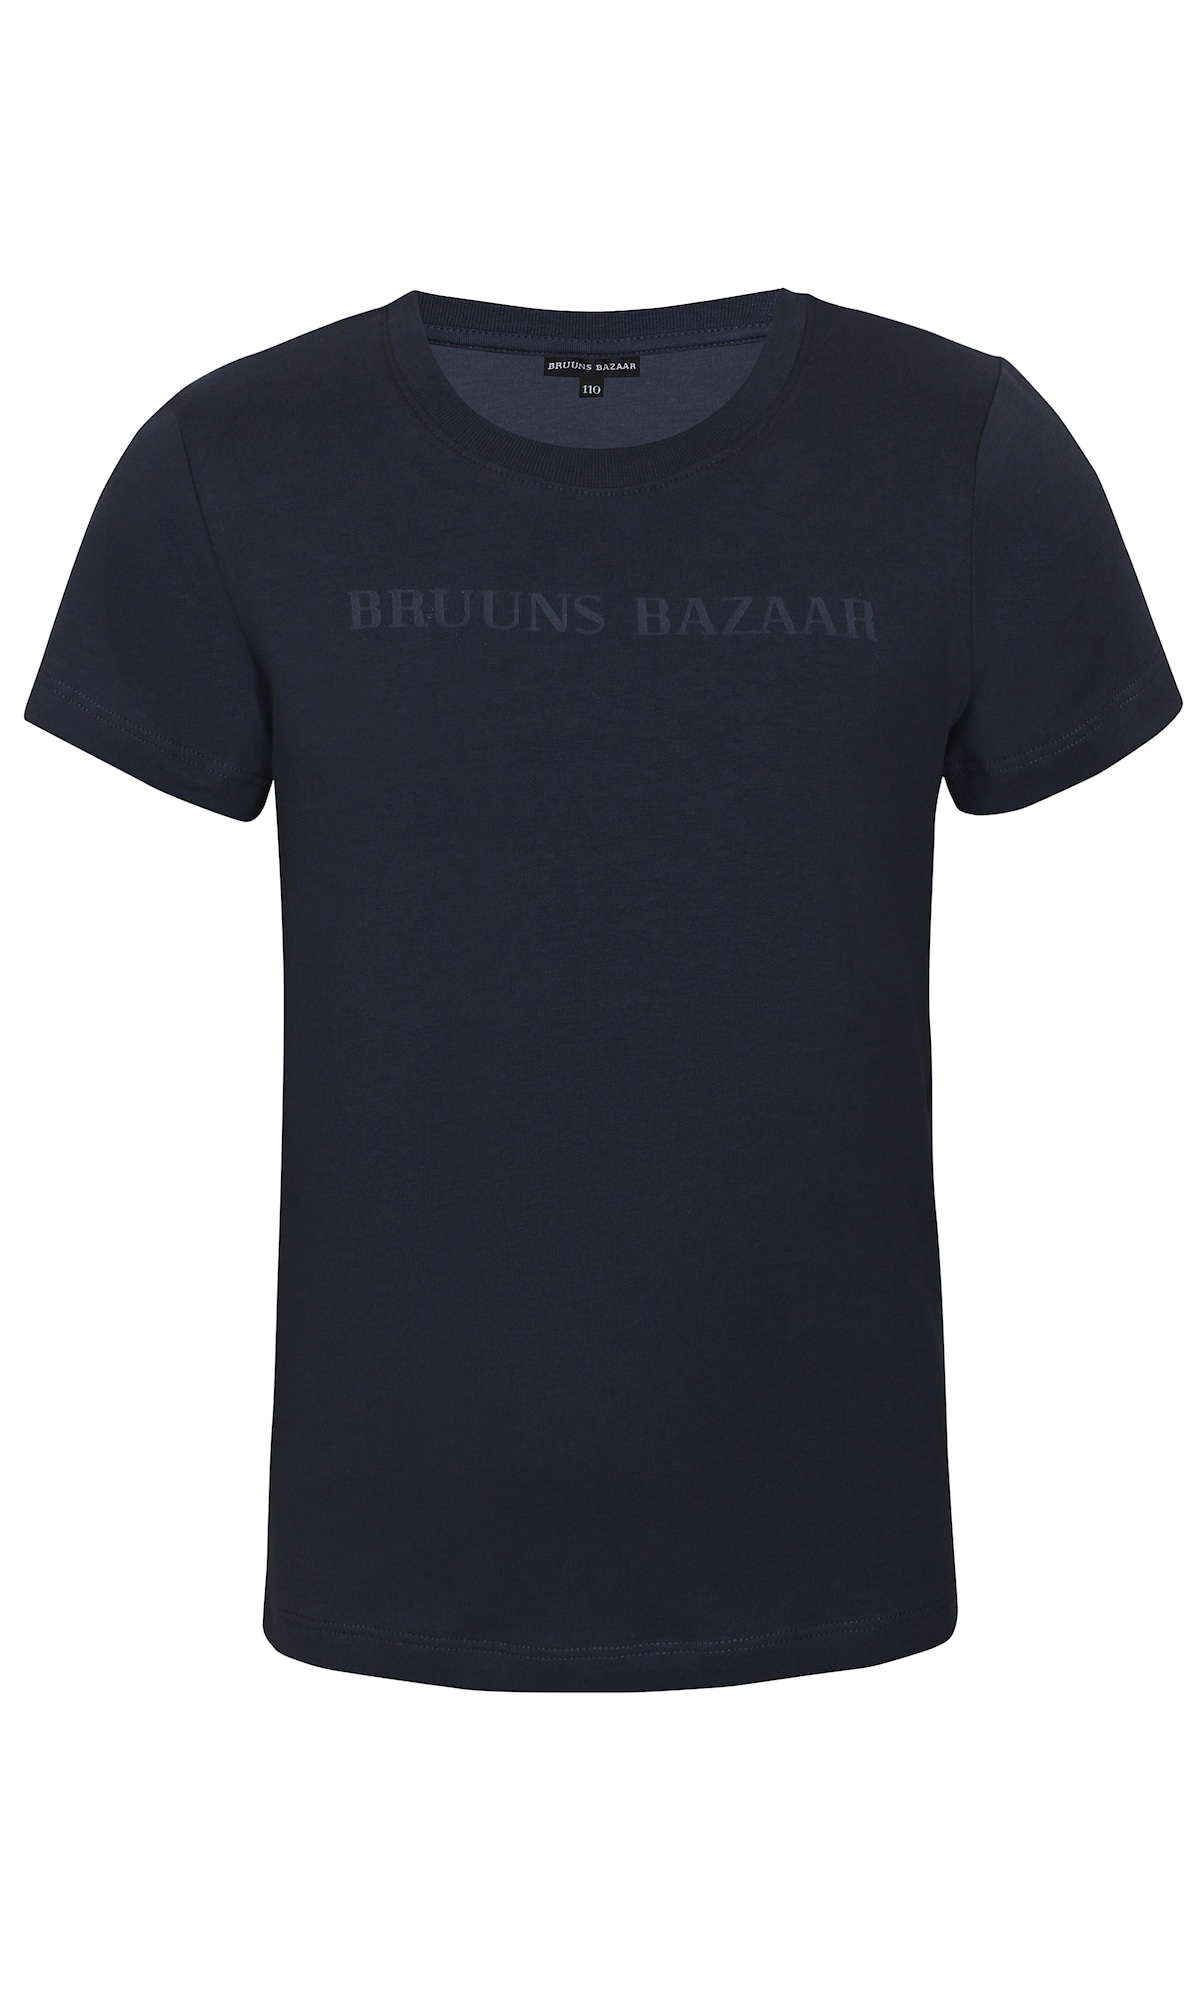 Bruuns Bazaar Kids Marškinėliai 'Hans Otto' tamsiai mėlyna jūros spalva / melsvai pilka